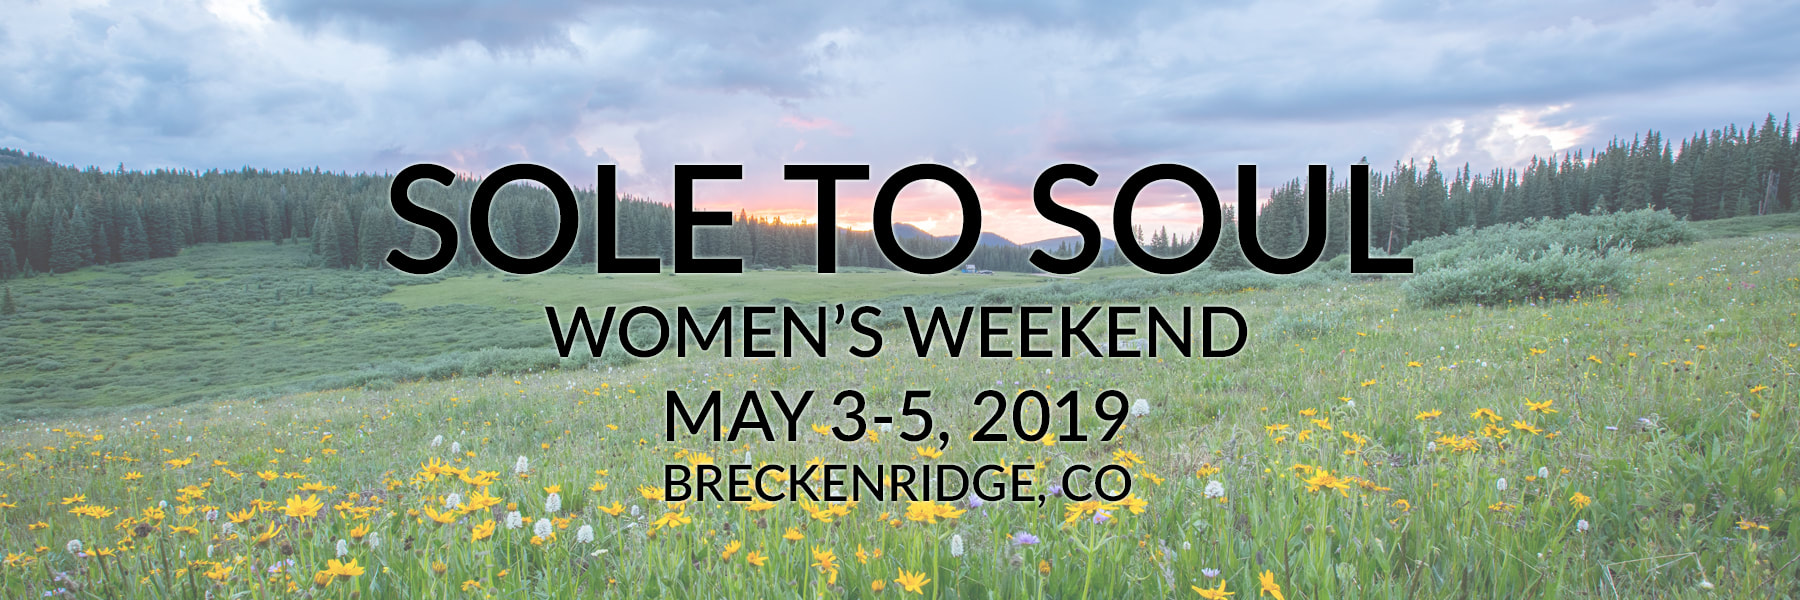 Sole to Soul Women's Weekend Yoga Retreat Breckenridge Colorado